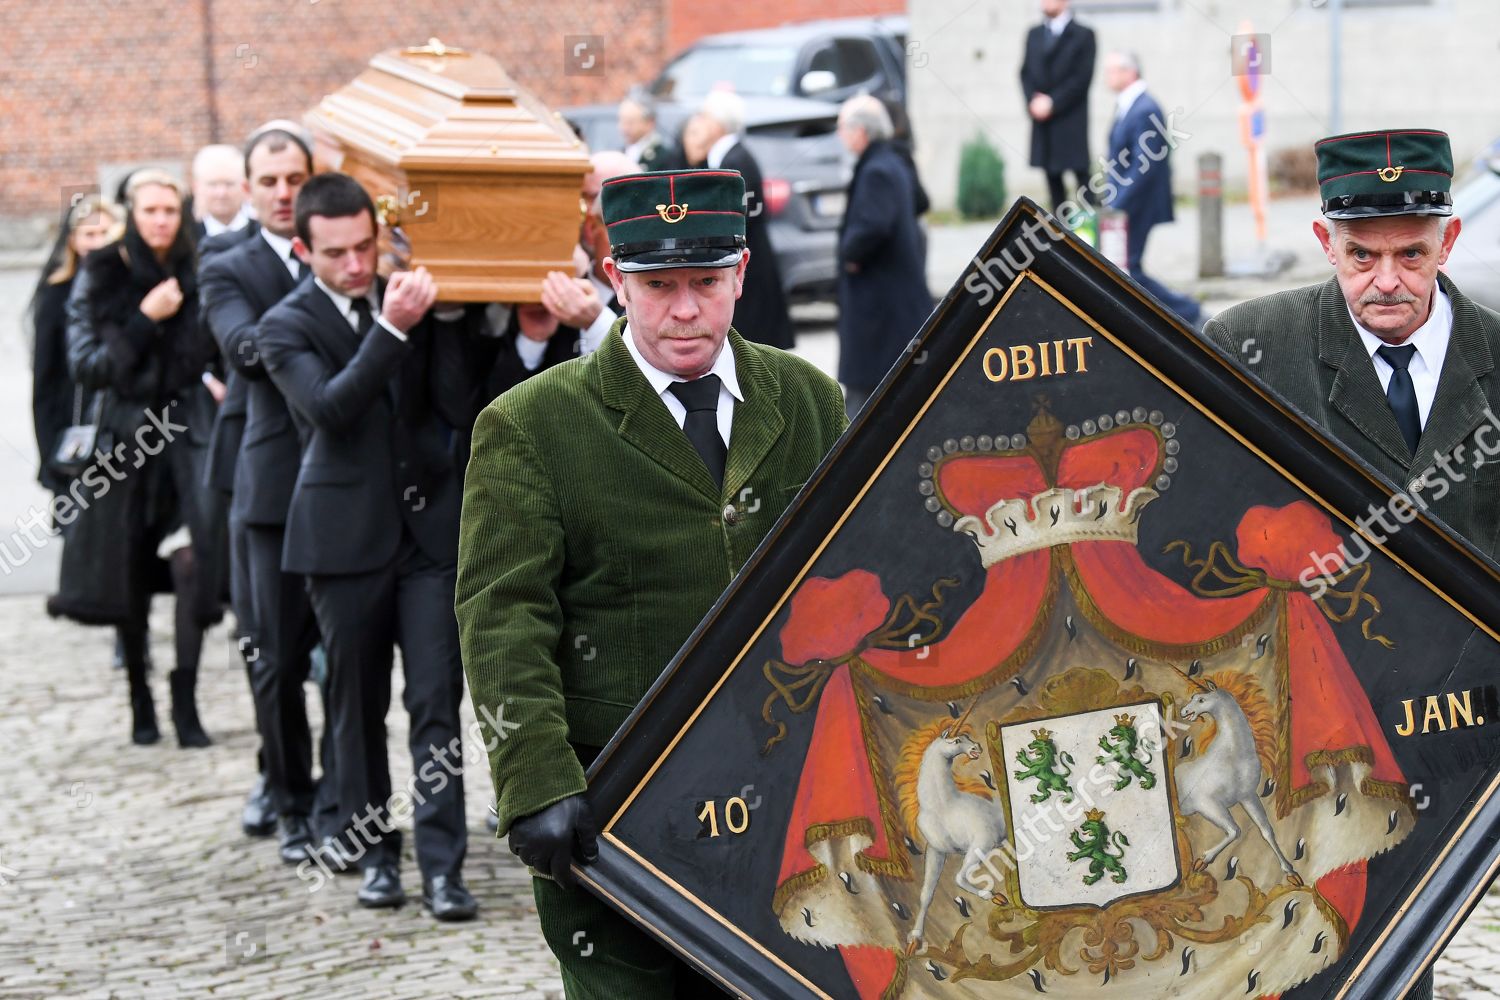 funeral-of-philippe-de-lannoy-anvaing-belgium-shutterstock-editorial-10063926n.jpg